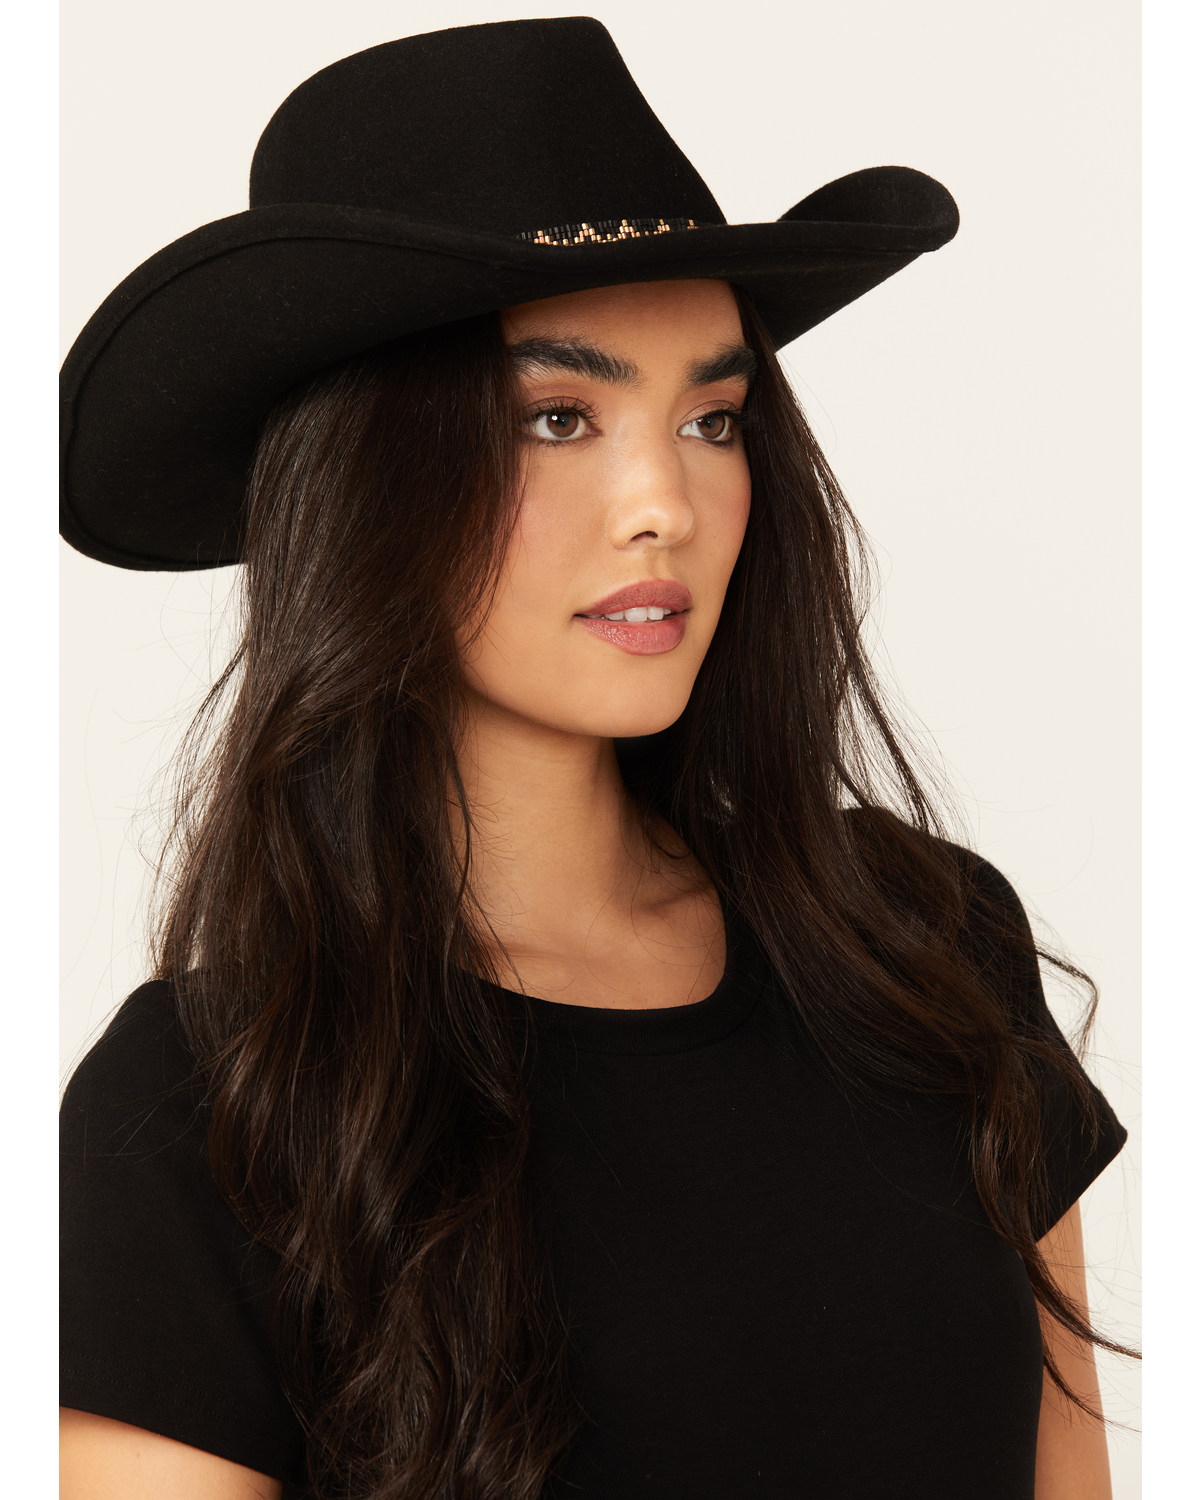 Nikki Beach Women's Electra Felt Western Fashion Hat